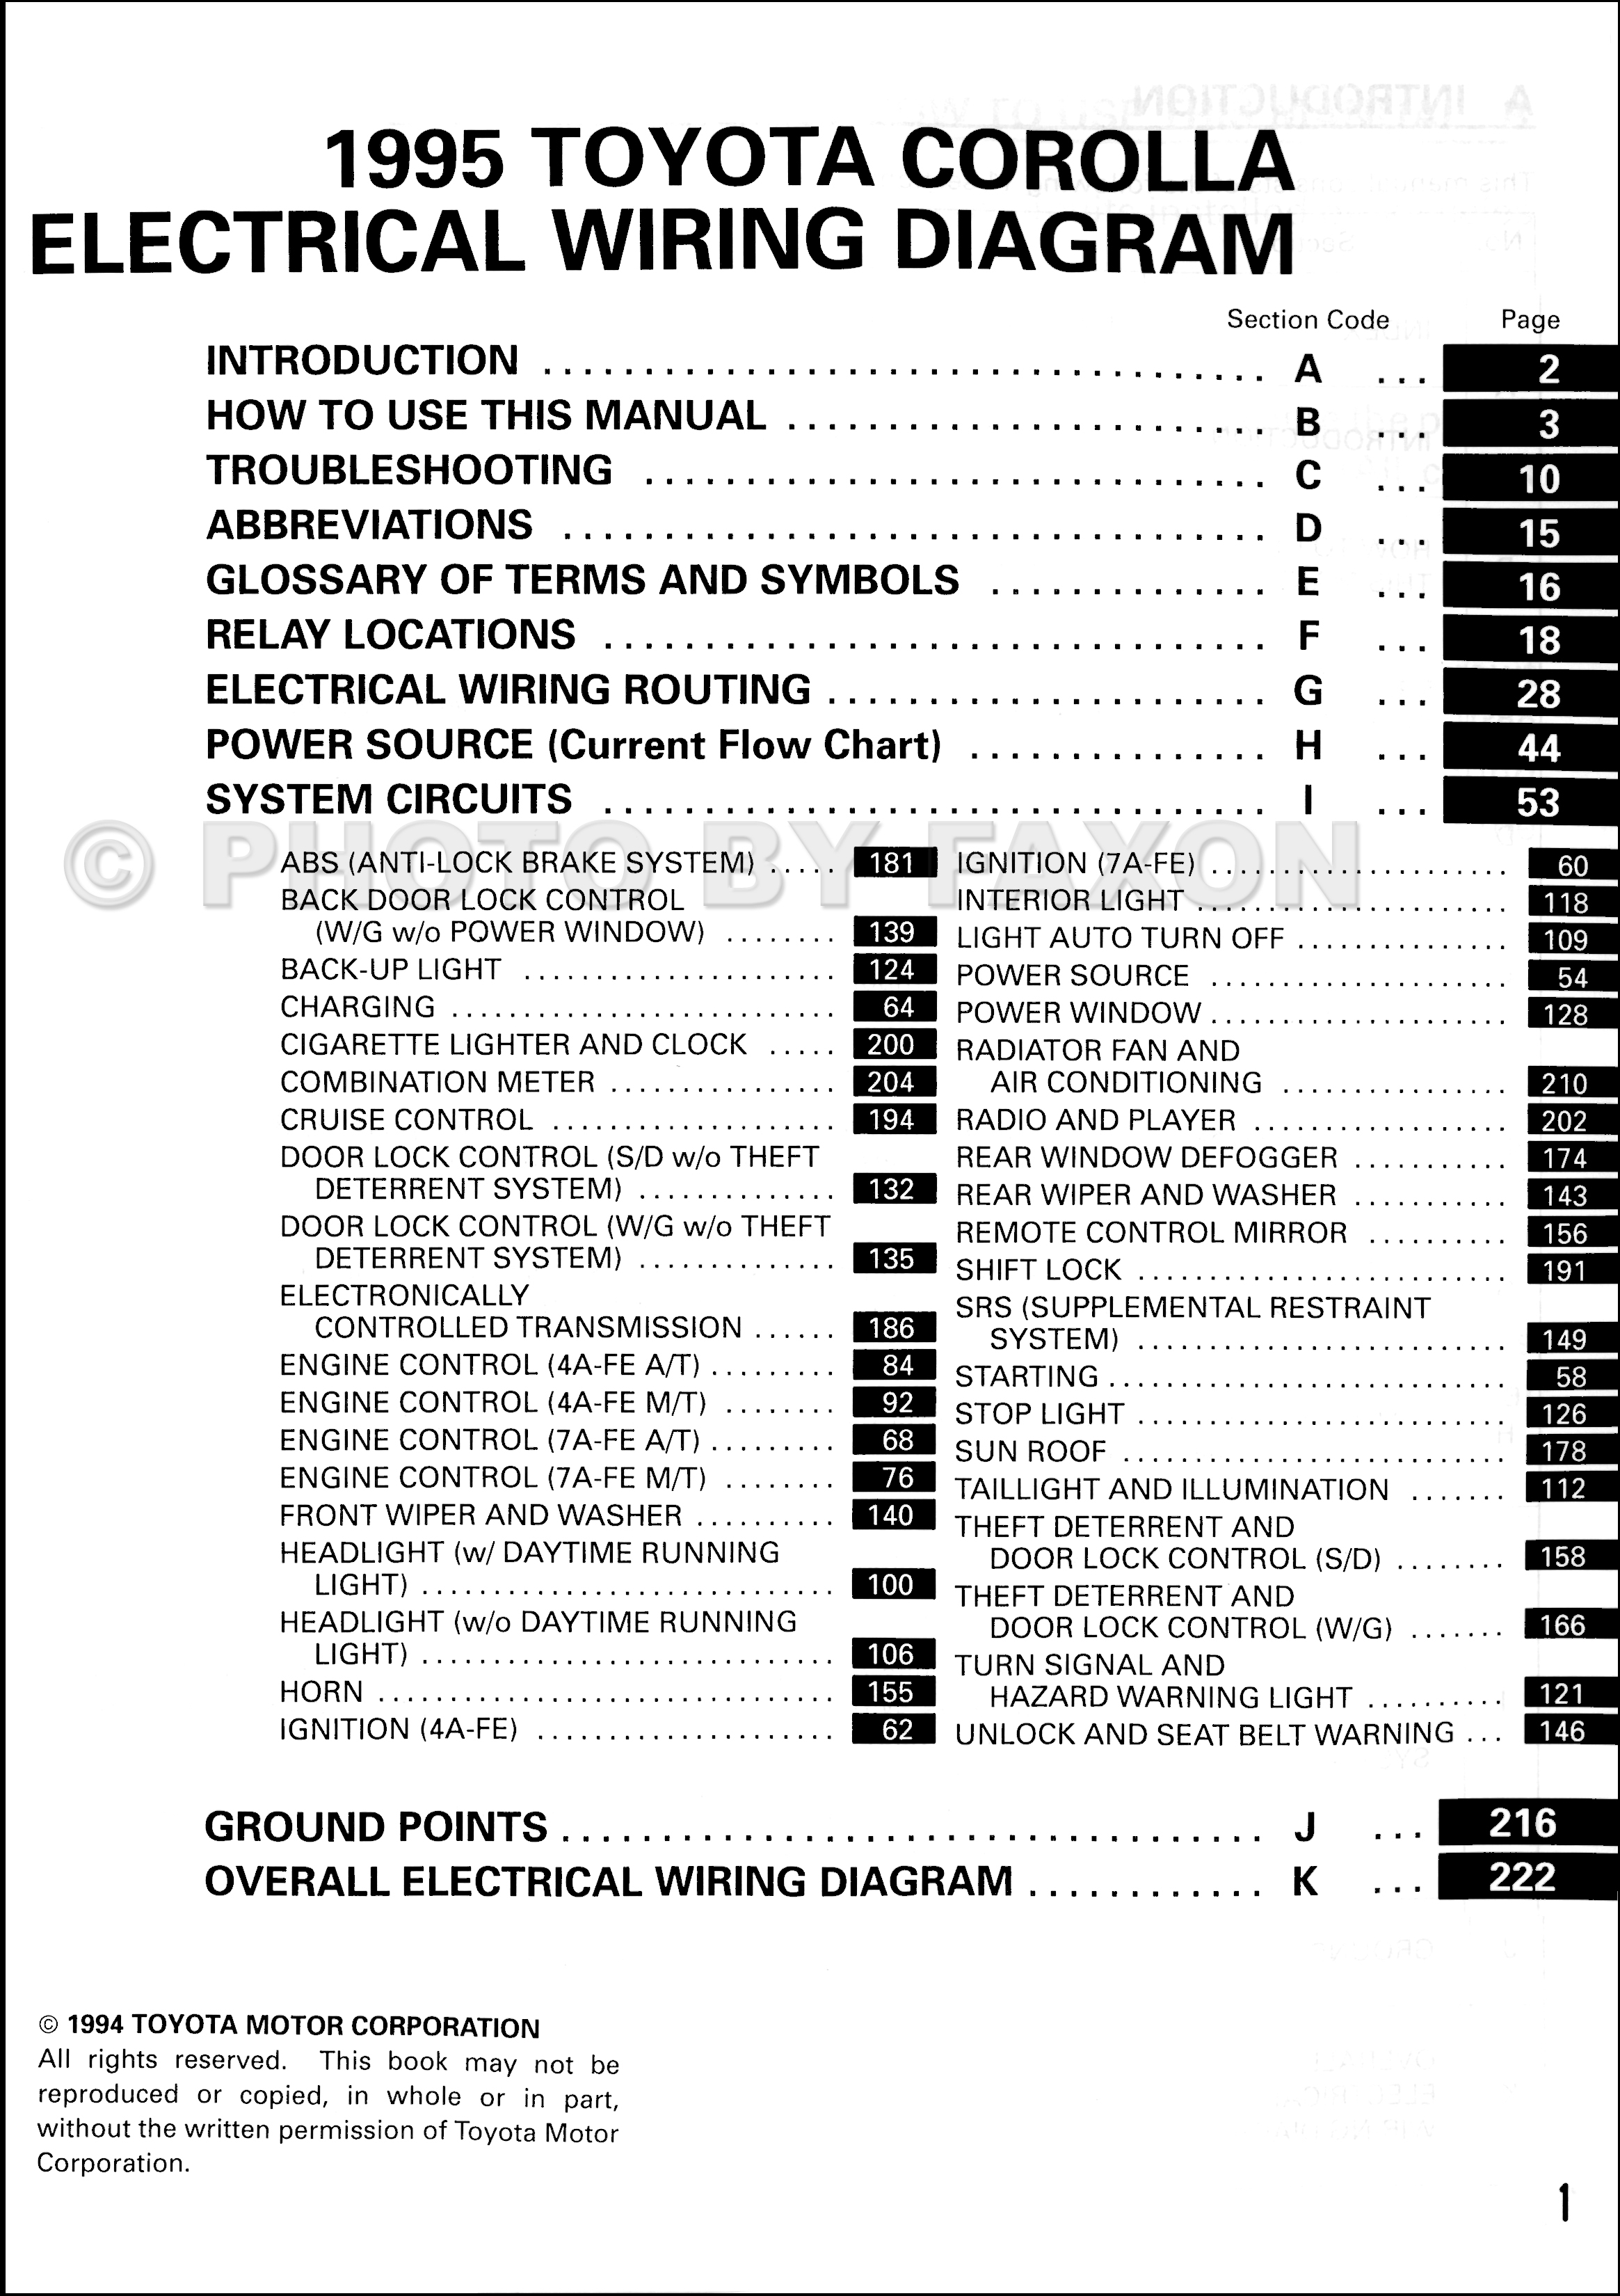 2003 Toyota Corolla Fuse Box Diagram Wiring Diagram For 2000 Toyota Corolla Wiring Diagram Web